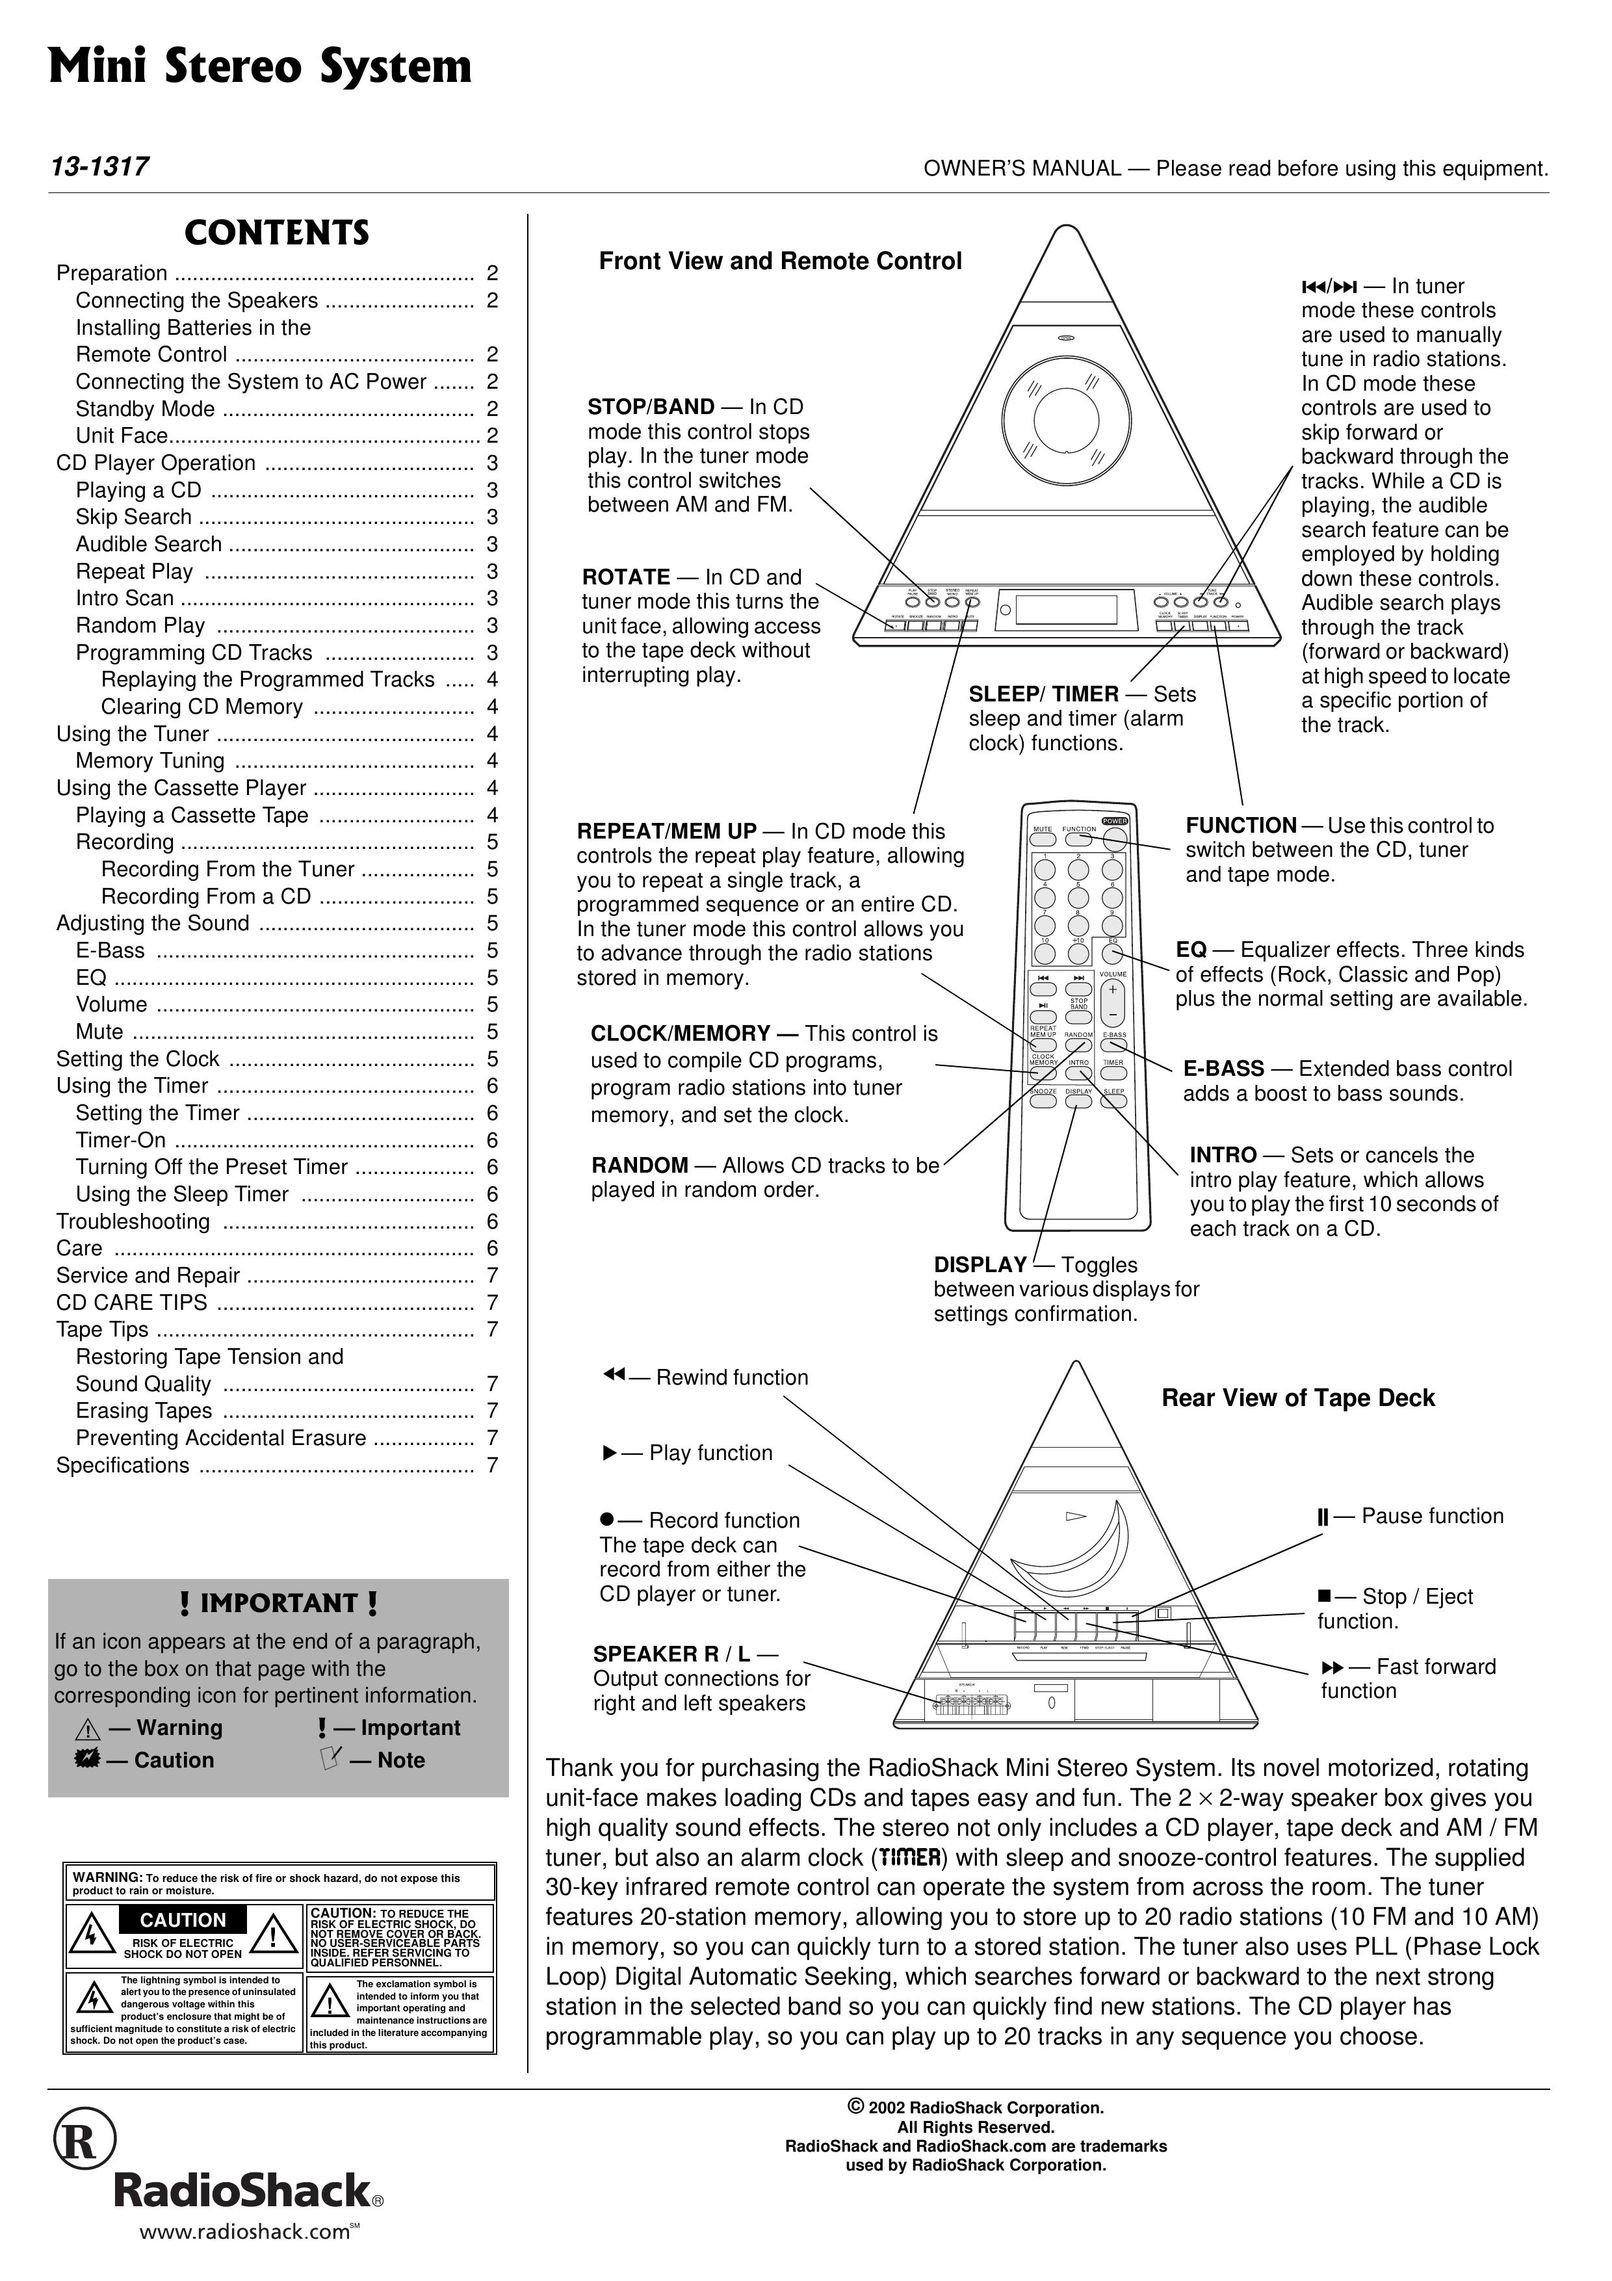 Radio Shack 13-1317 Stereo System User Manual